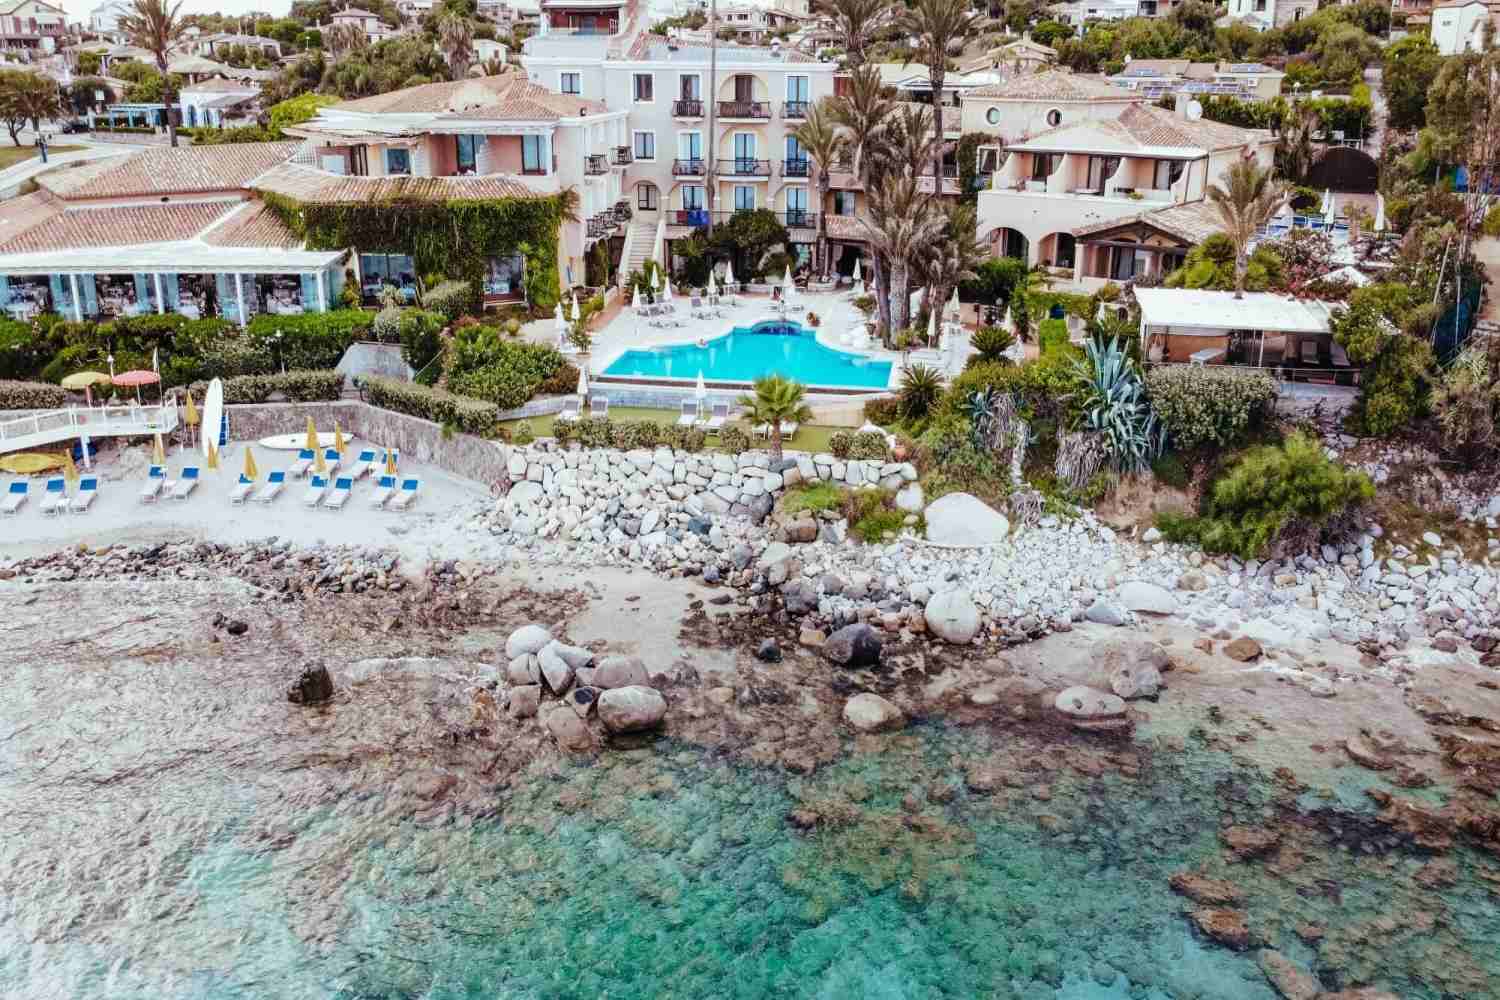 Hotel La Bitta Arbatax, Sardinia - Italy